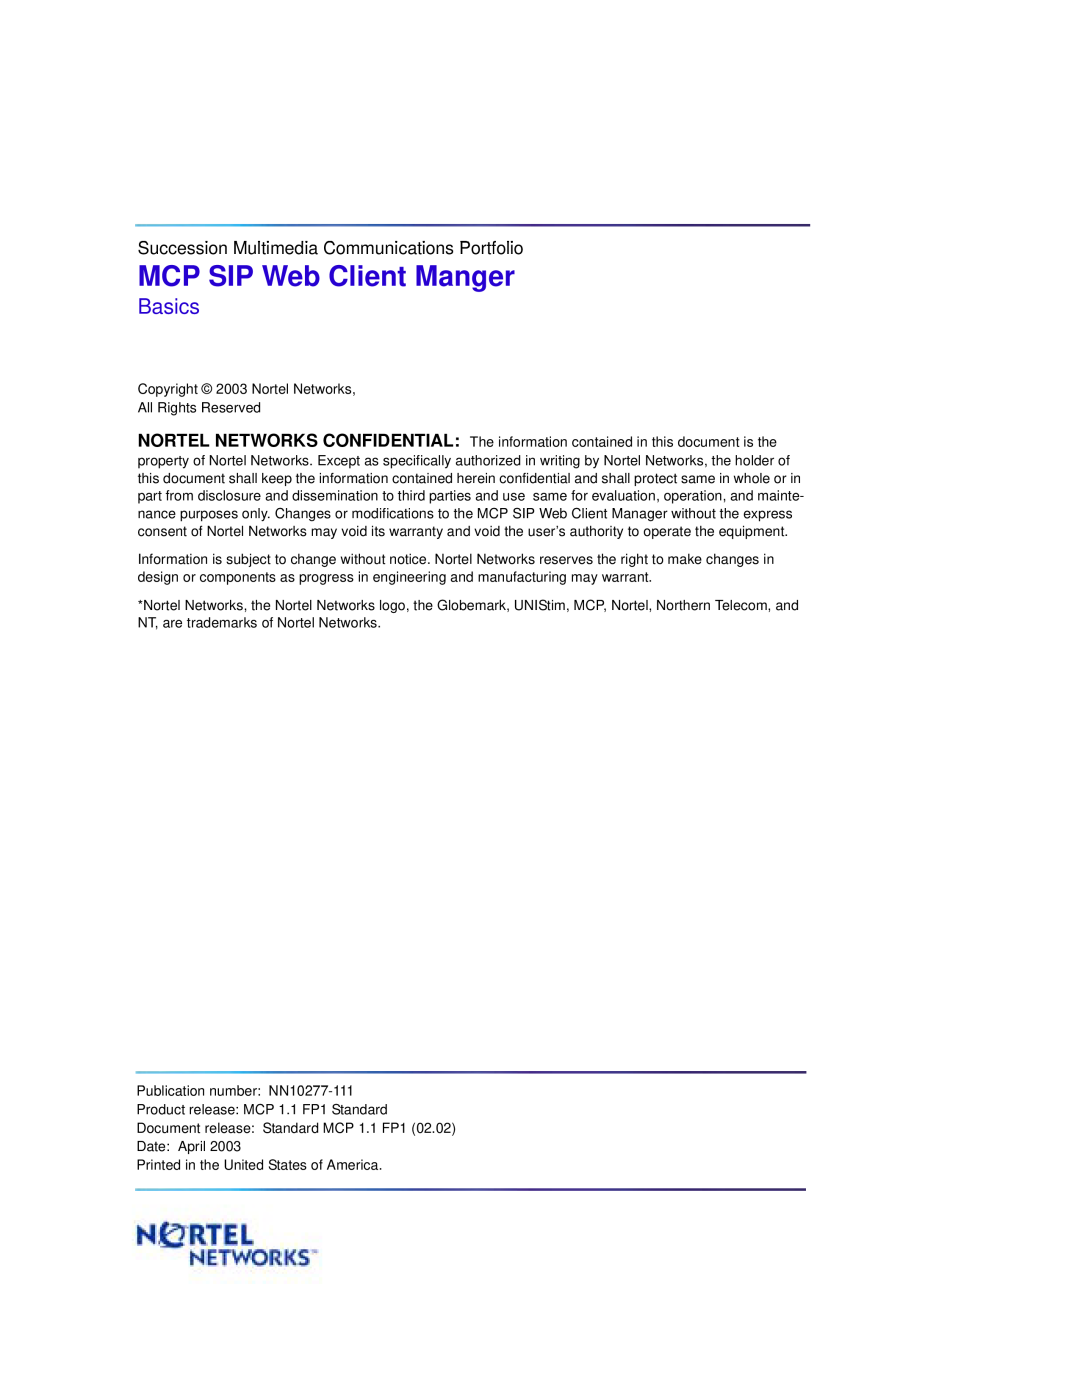 Nortel Networks NN10277-111 manual MCP SIP Web Client Manger, Basics, Succession Multimedia Communications Portfolio 